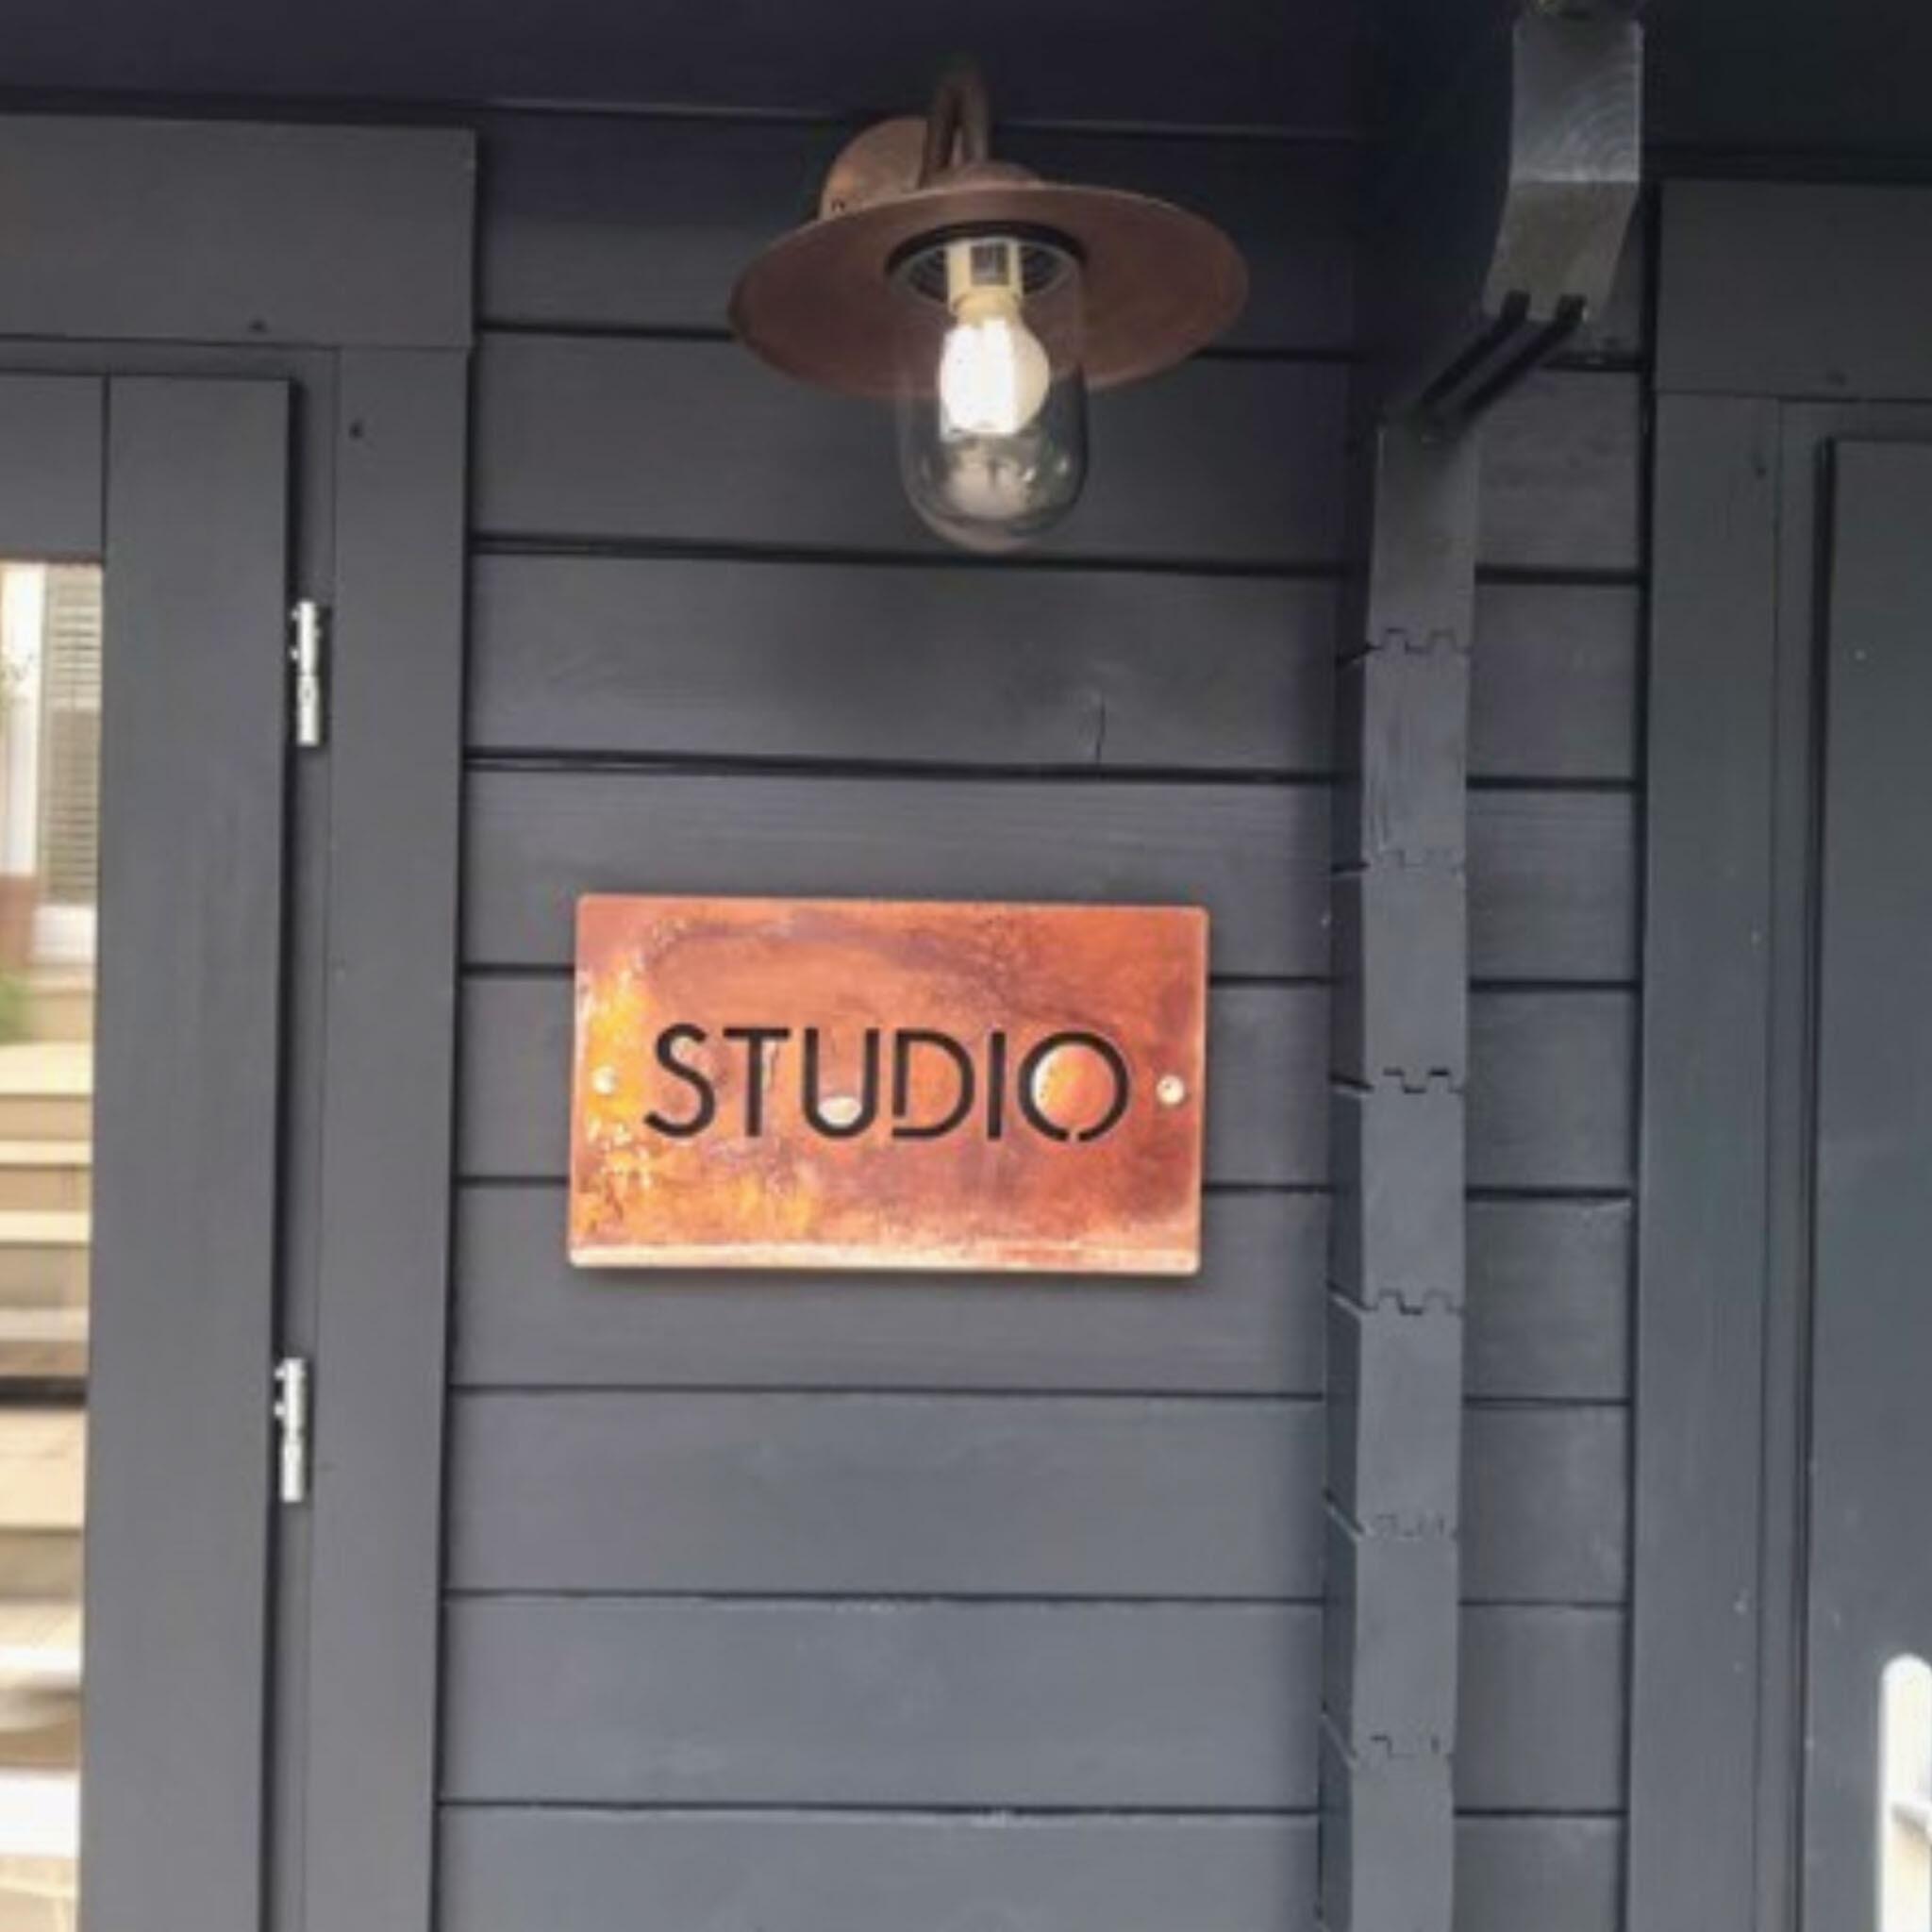 Studio sign